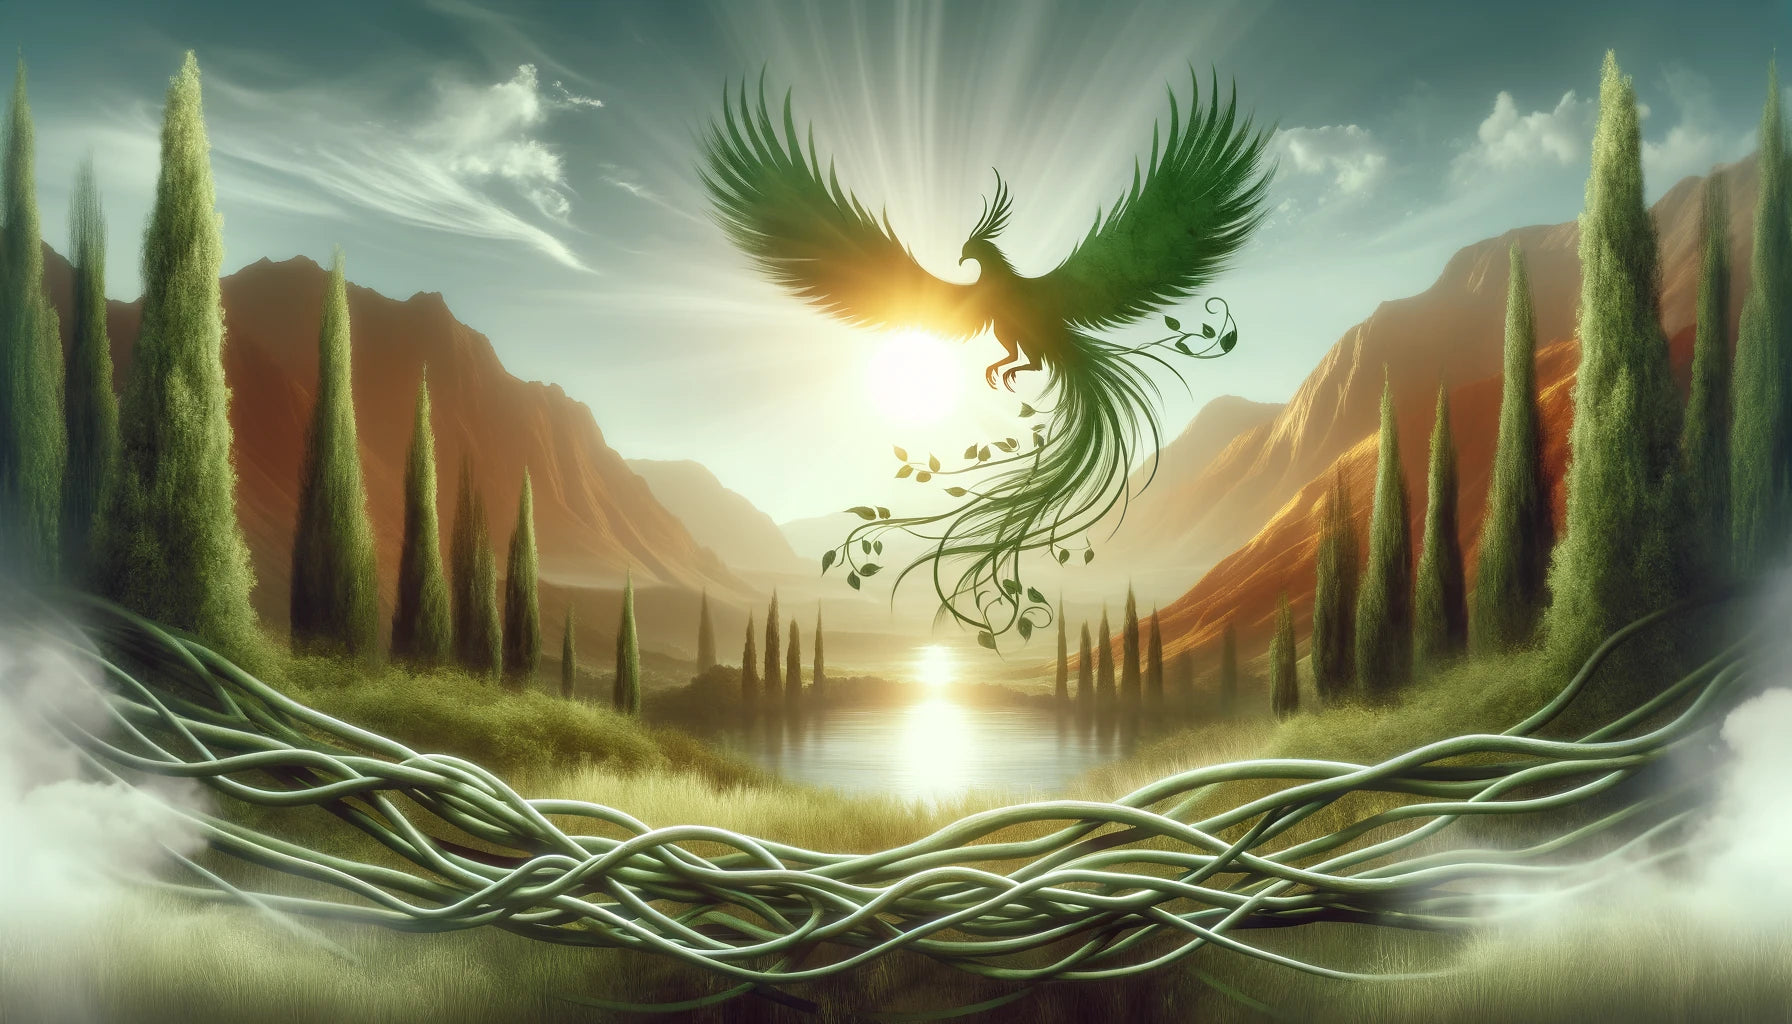 serene landscape depicting healing process with phoenix